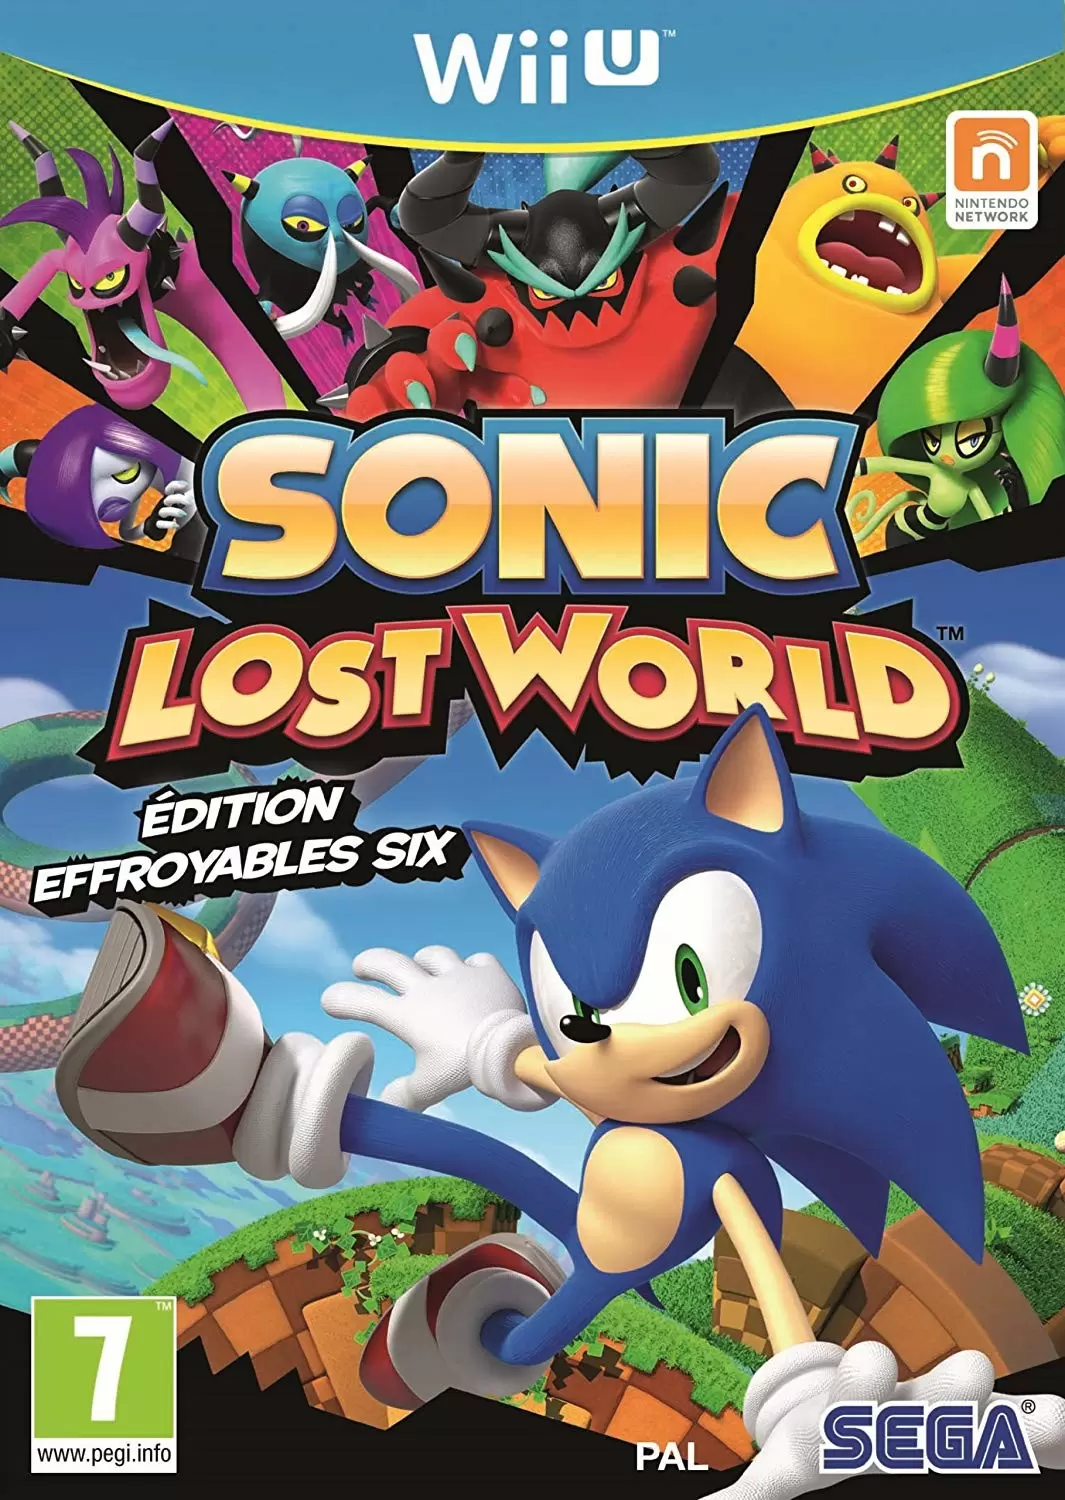 Wii U Games - Sonic Lost World Edition Effroyables Six